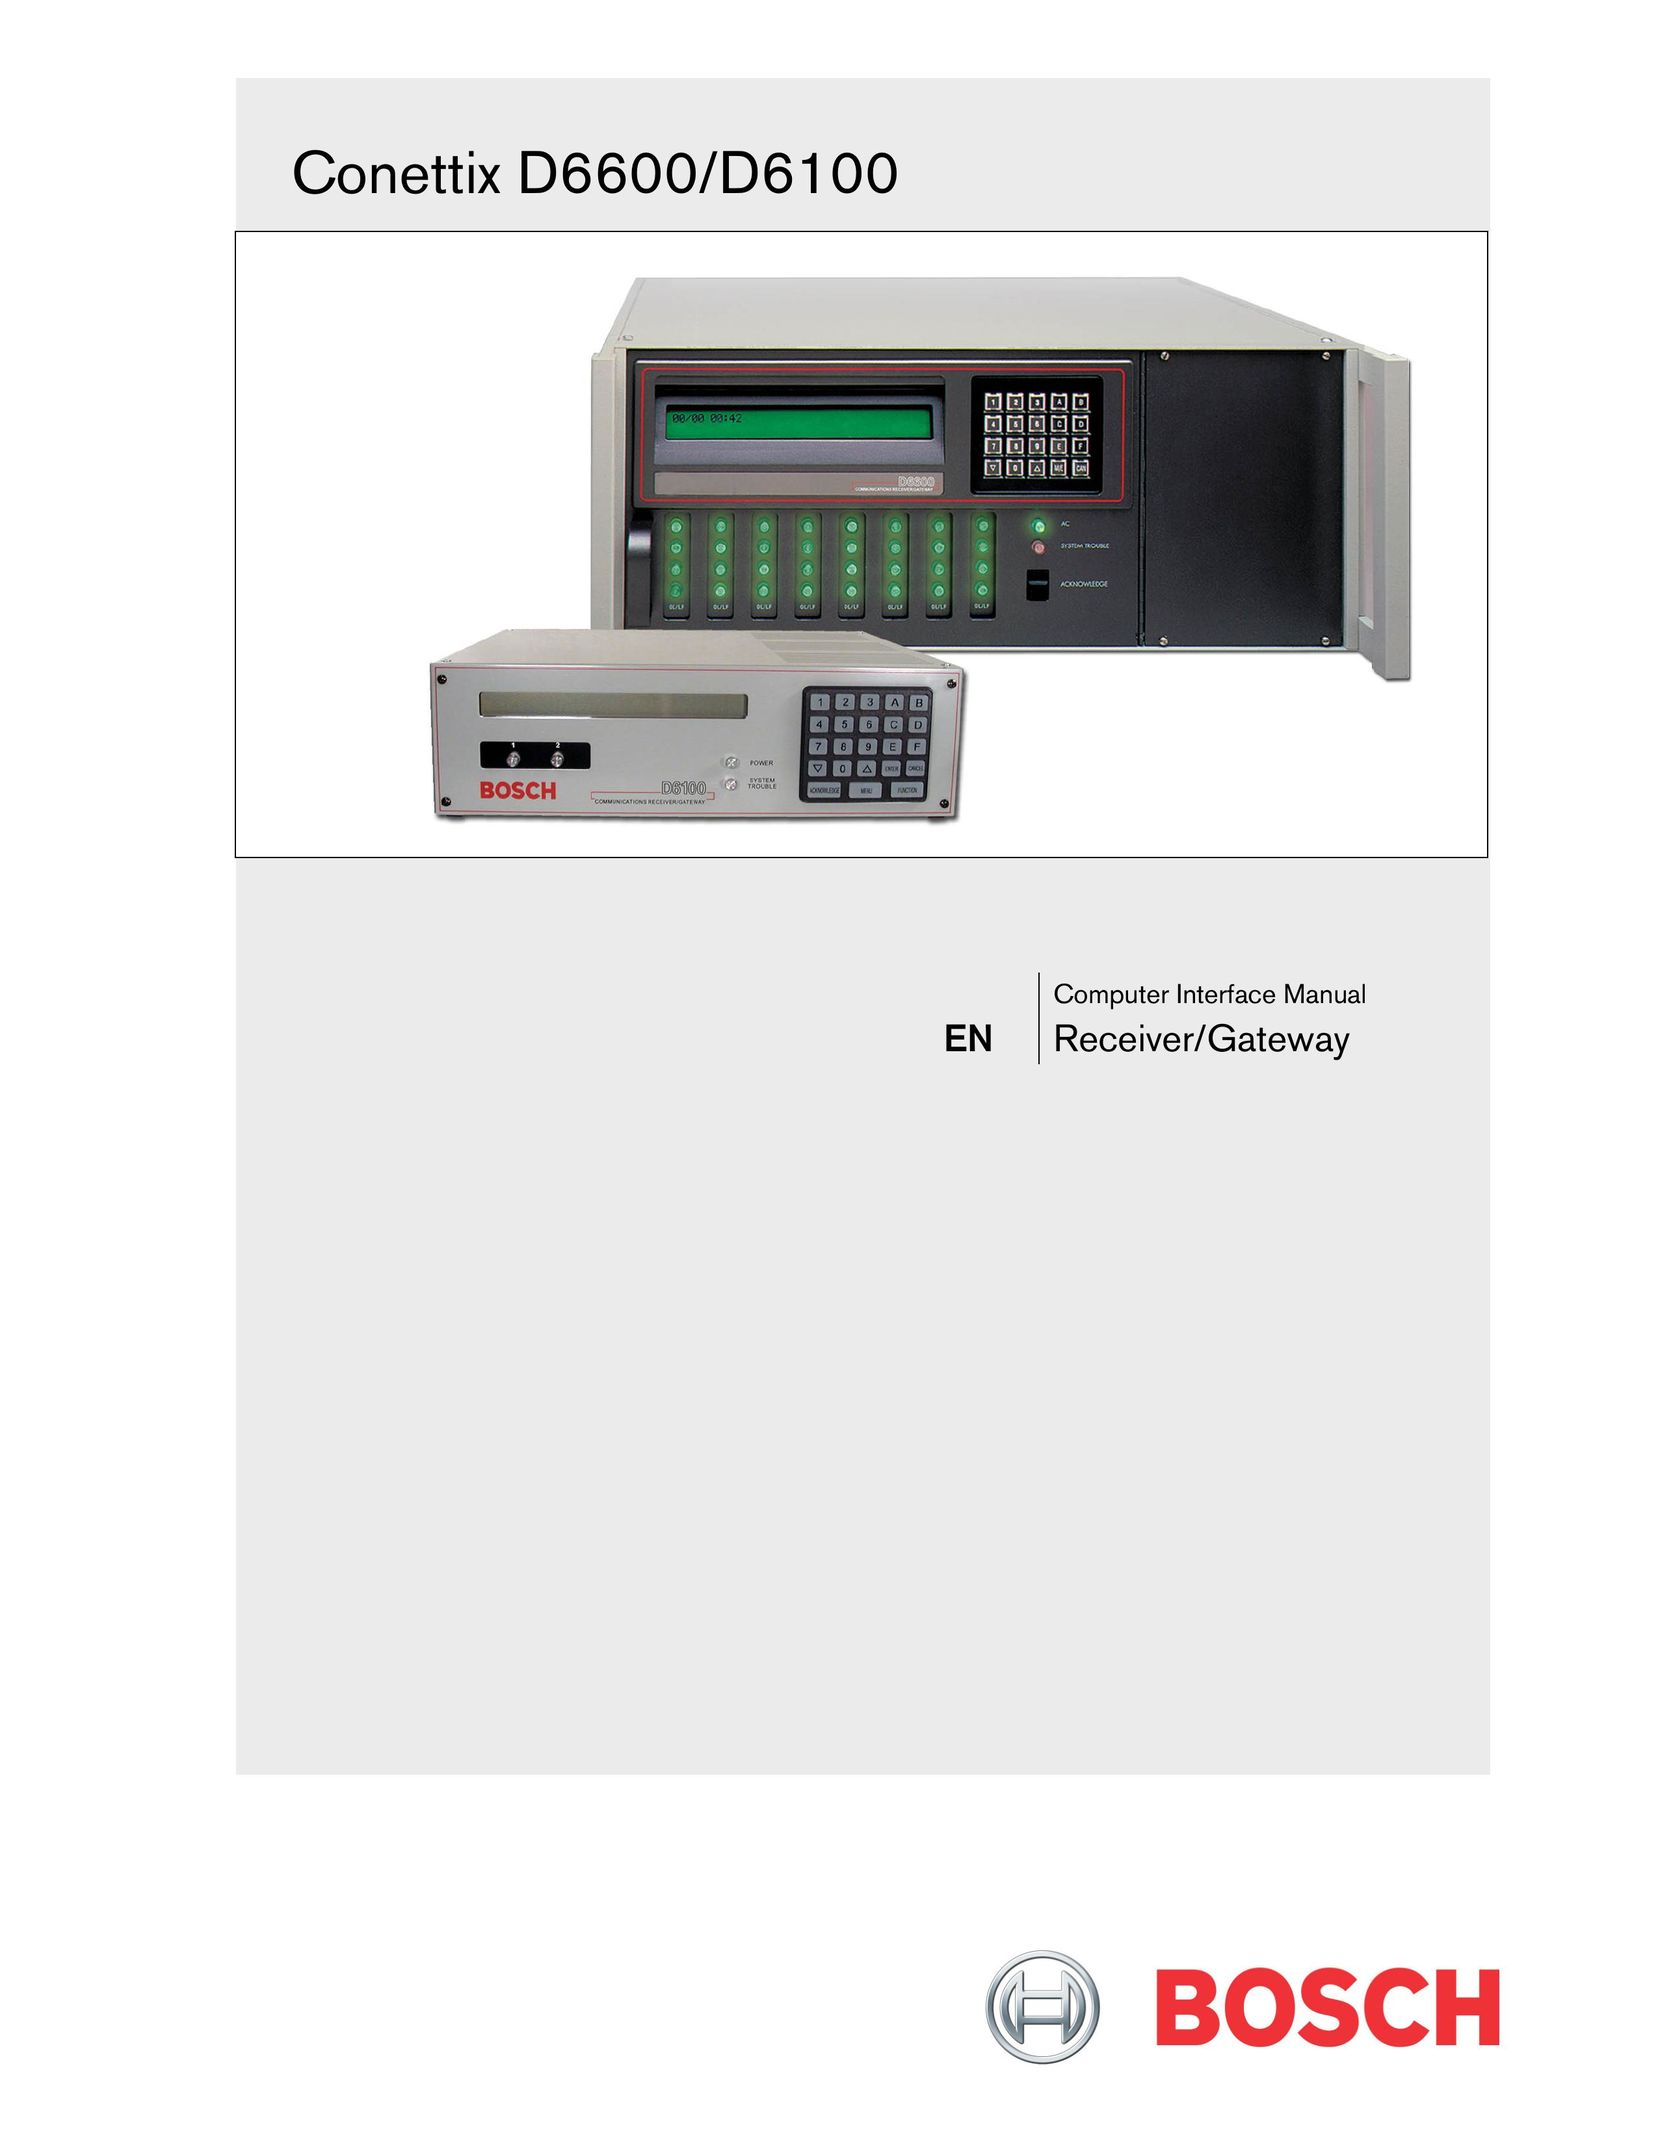 Bosch Appliances D6100 Network Router User Manual